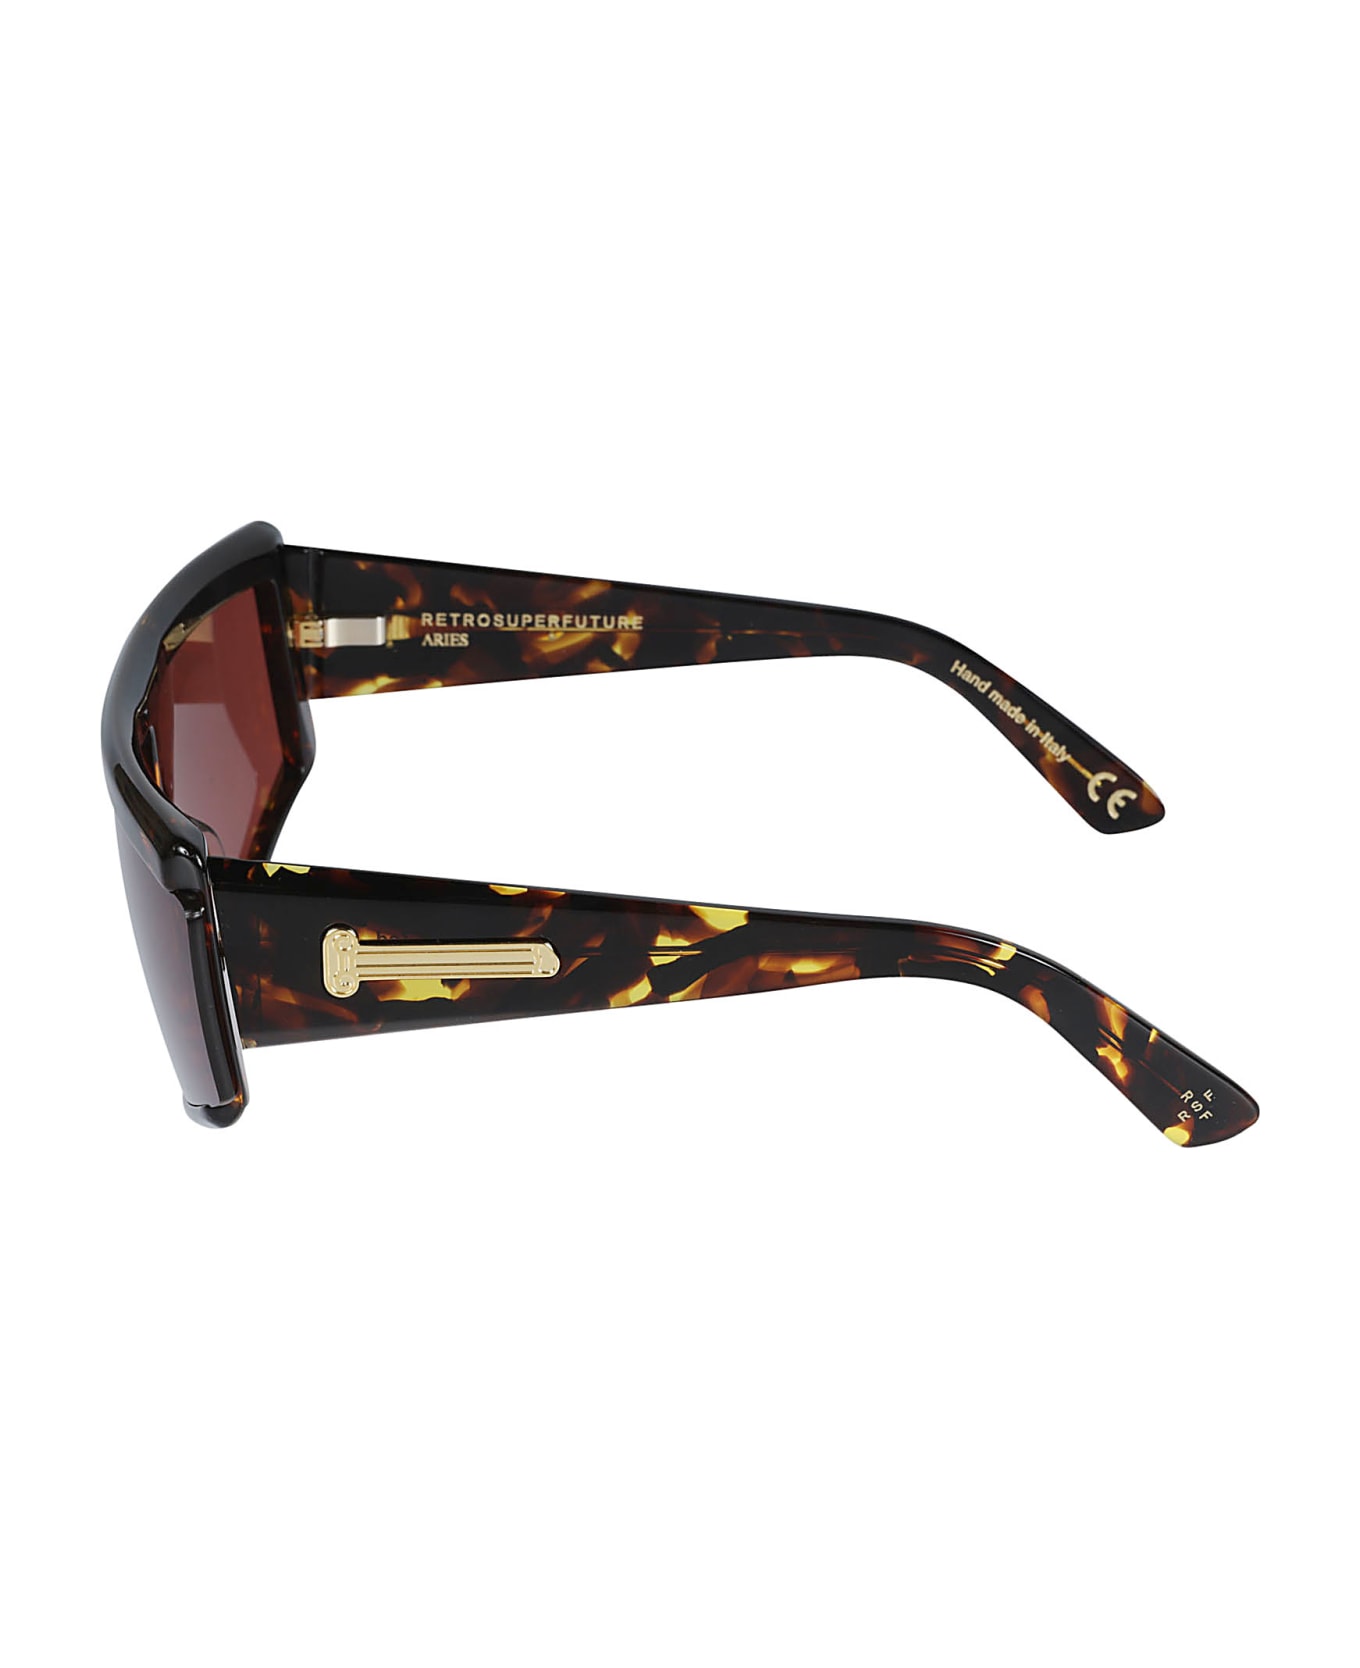 RETROSUPERFUTURE Aries Zed Sunglasses - Havana サングラス